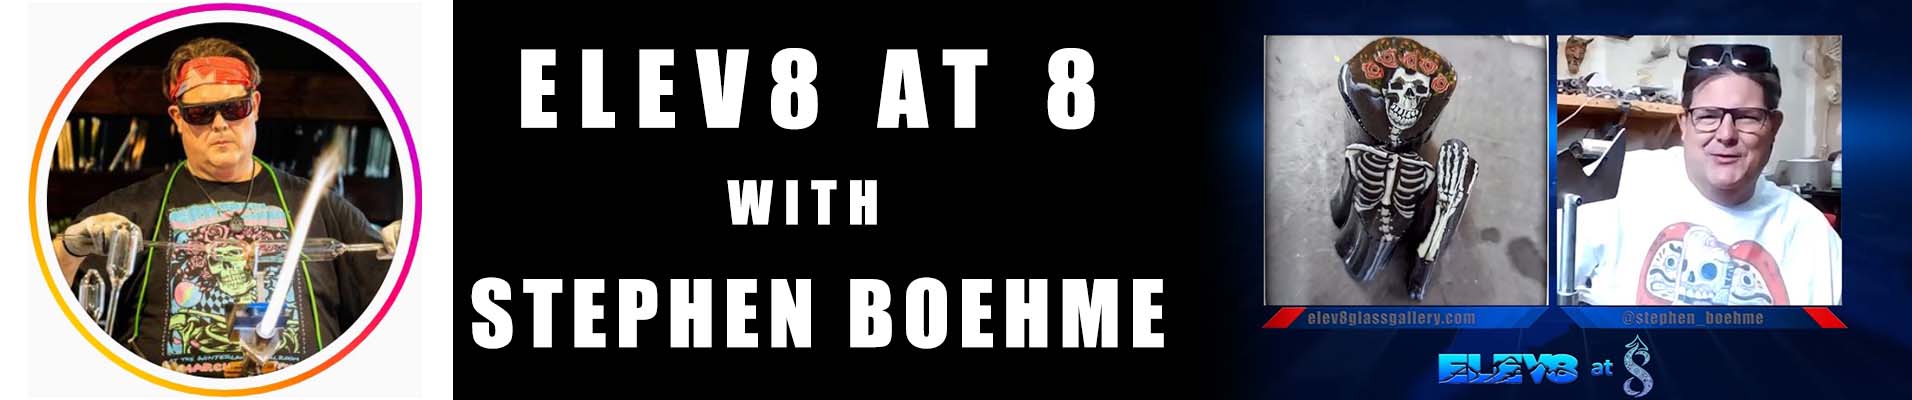 stephen-boehme-elev8-at-8-event-page-banner.jpg